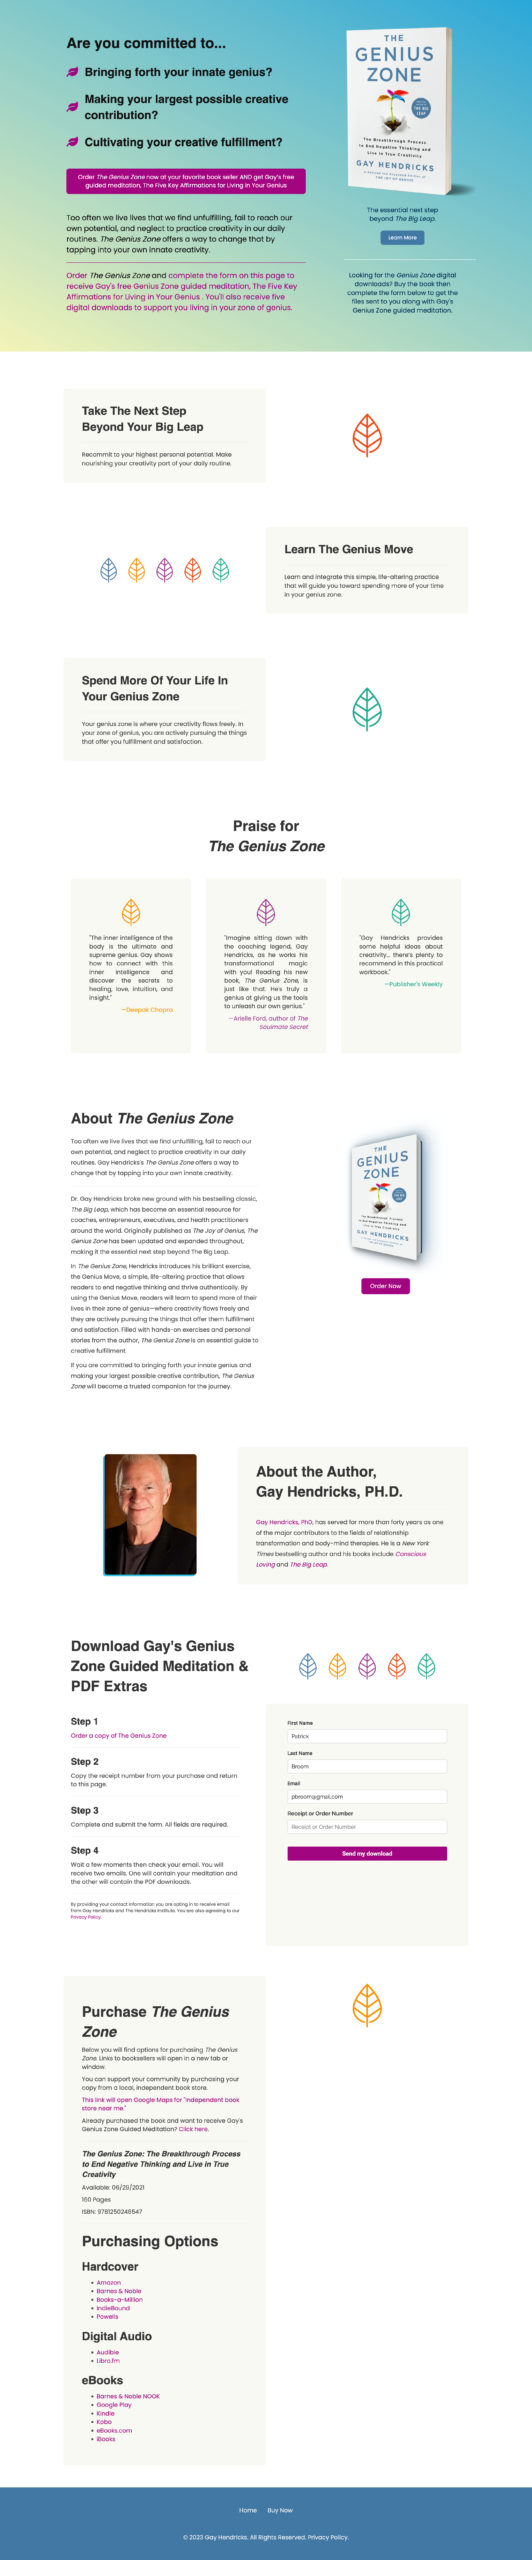 The Genius Zone website screenshot